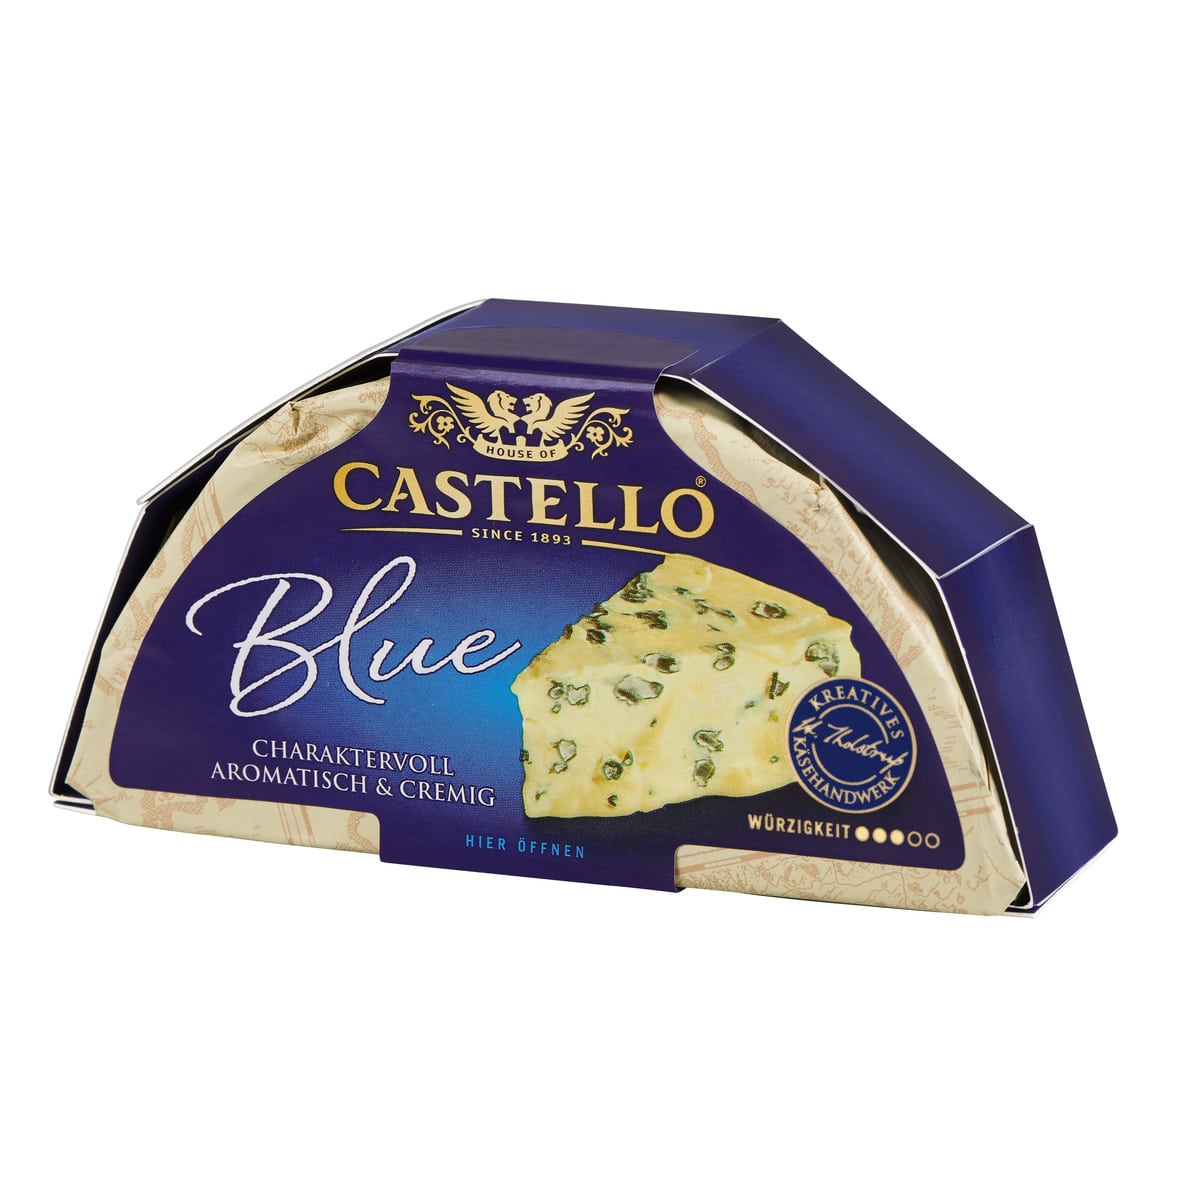 Castello Blue 72% 150g